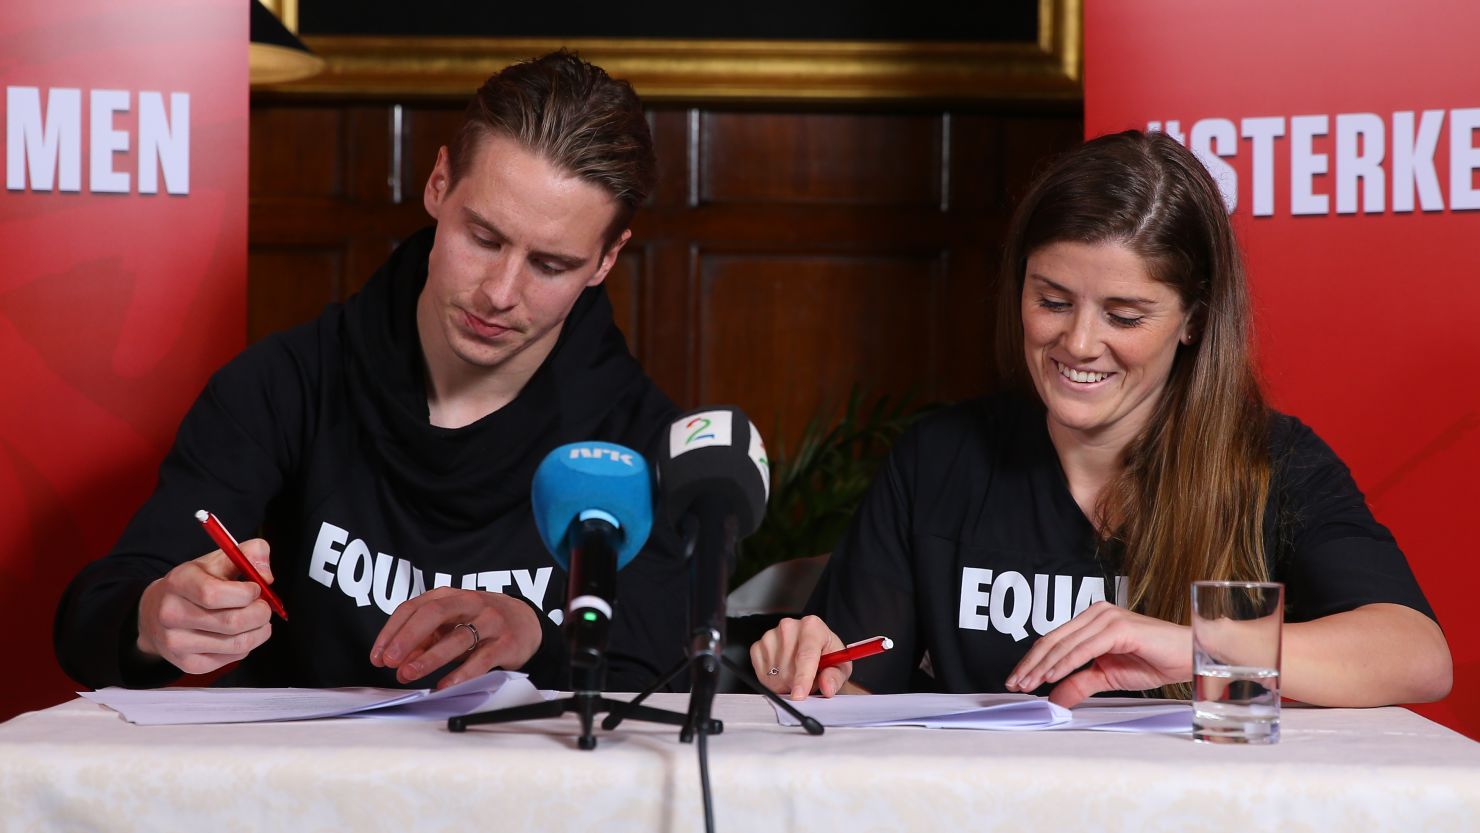 Stefan Johansen (L) and Maren Mjelde (R) sign the agreement in London.